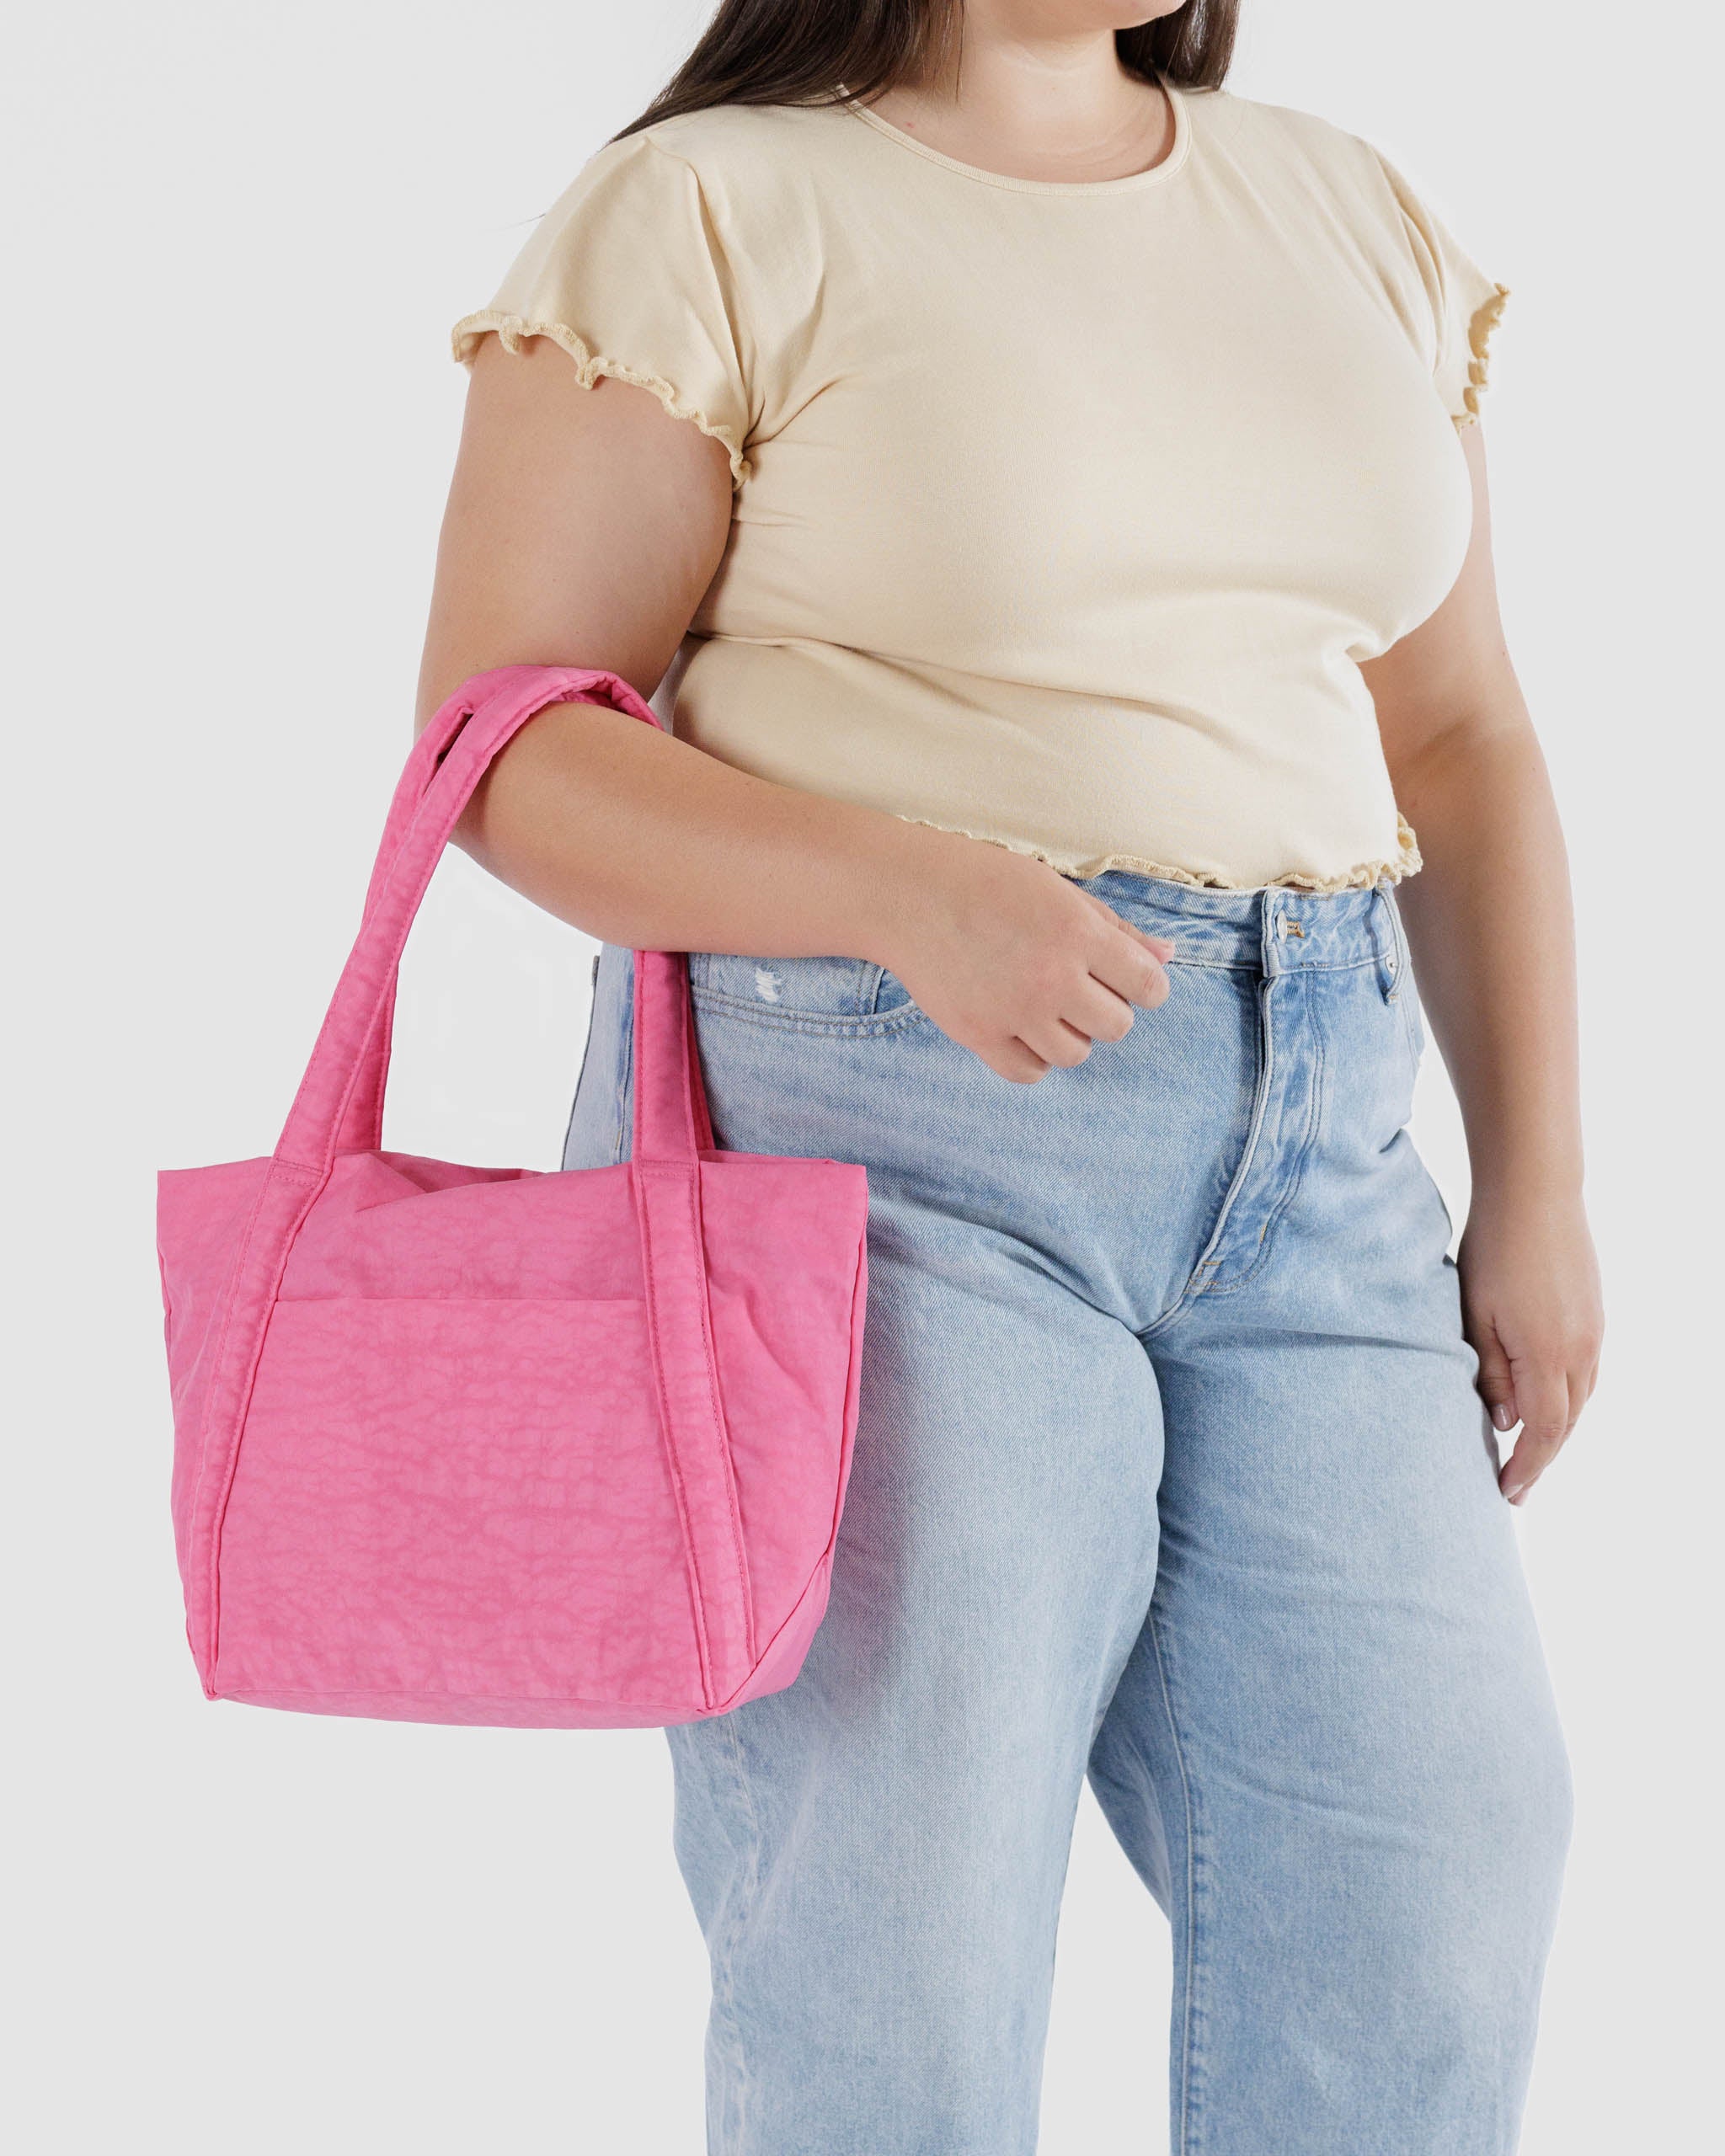 women-holding-azalea-pink-mini-cloud-bag-on arm